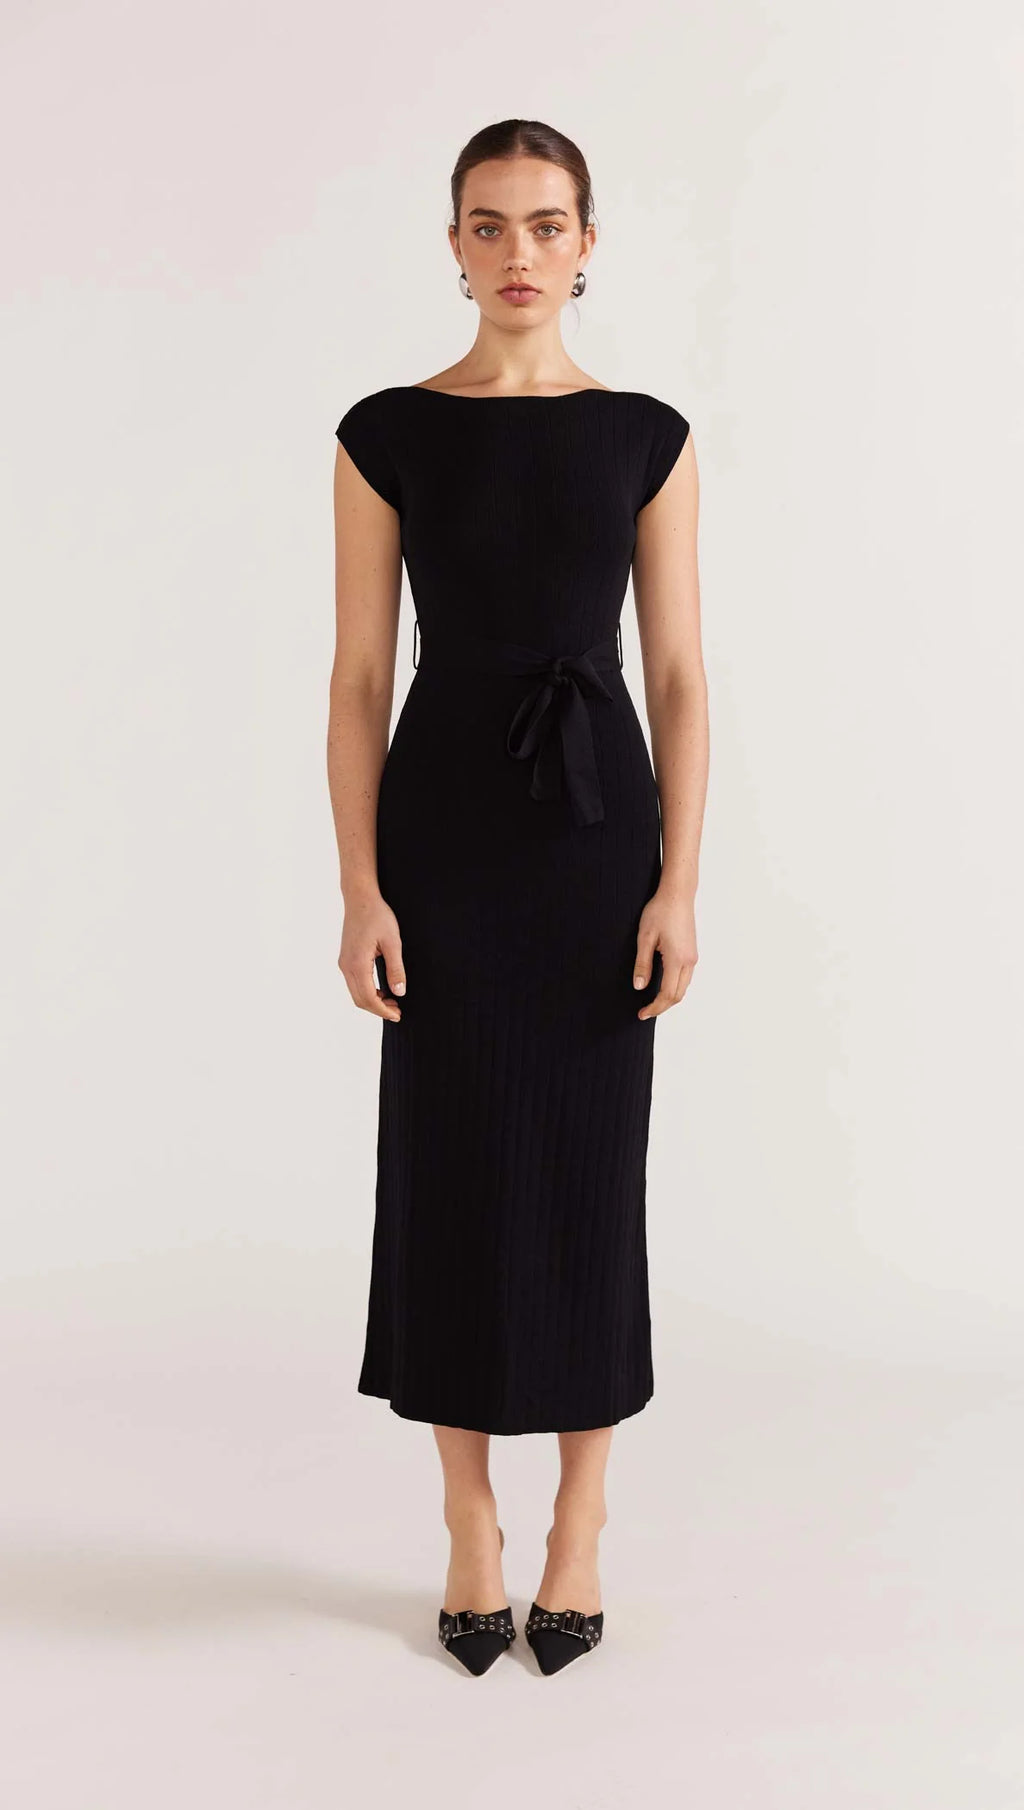 STAPLE THE LABEL - Luana Knit Midi Dress